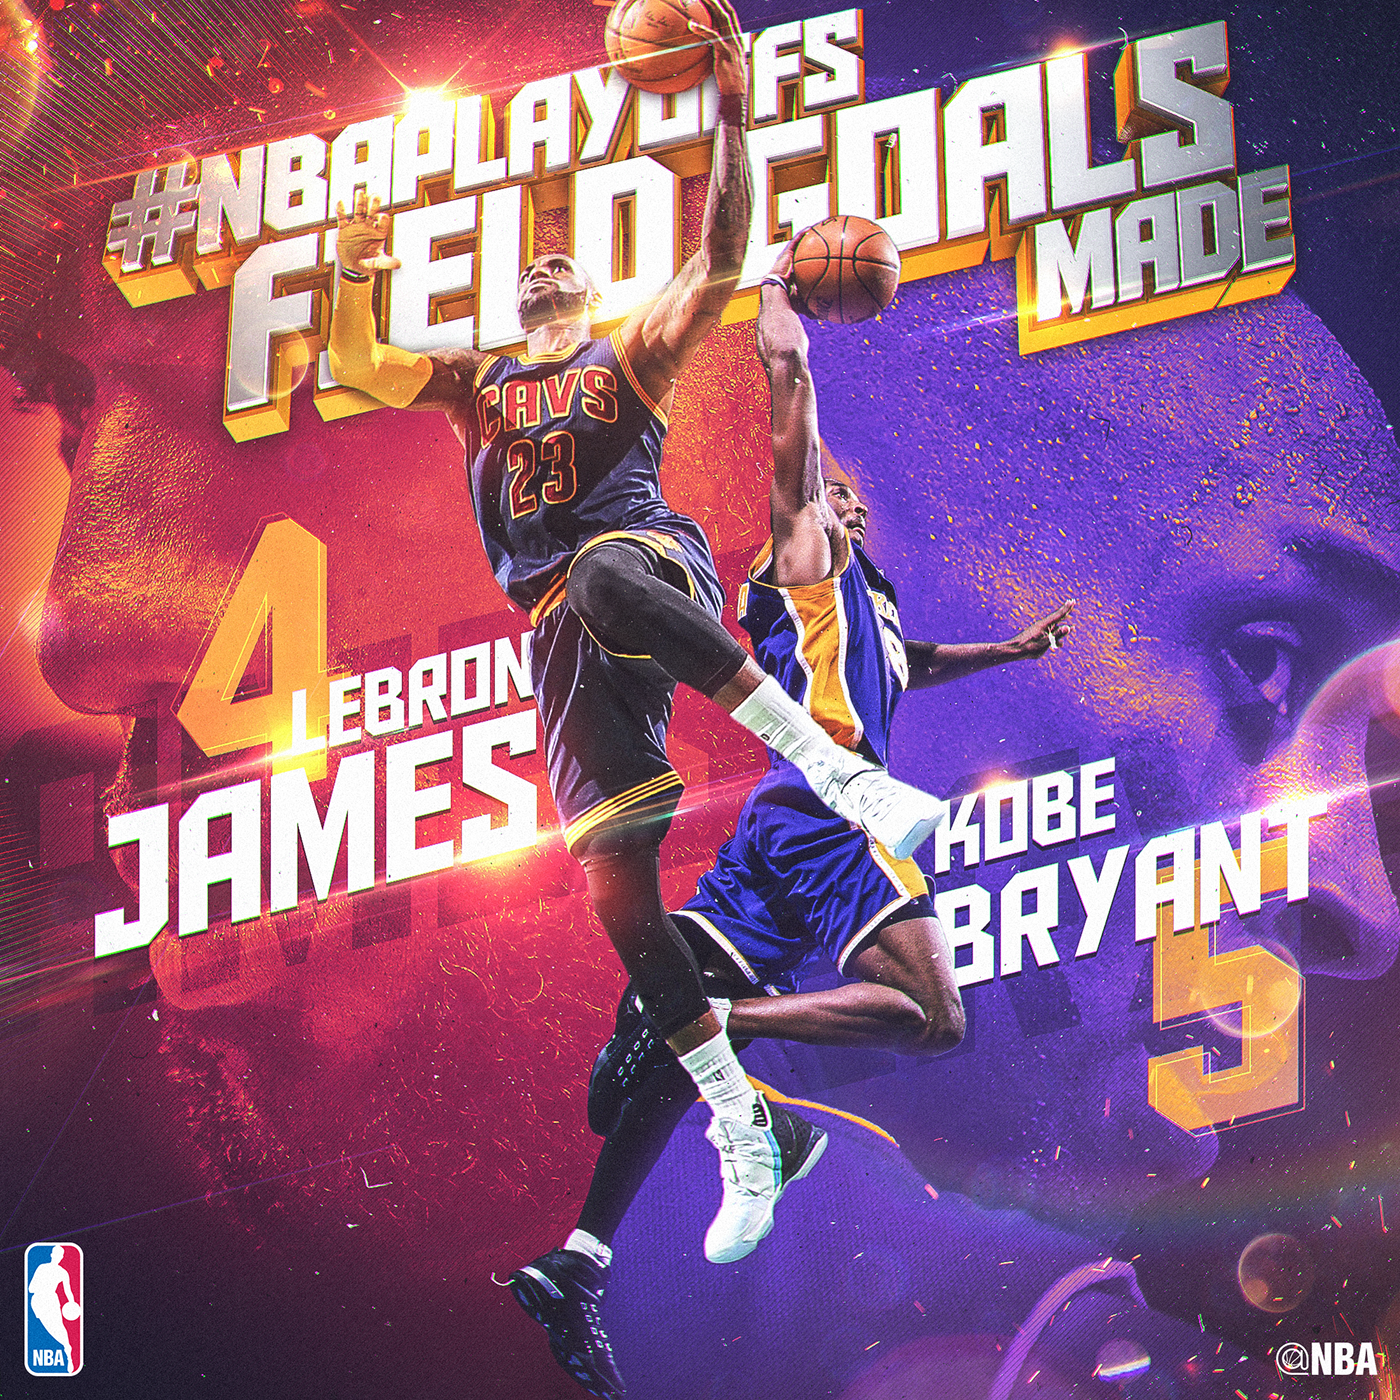 NBA social media basketball warriors cavaliers steph curry LeBron James Kobe Bryant Shaq Russell Westbrook